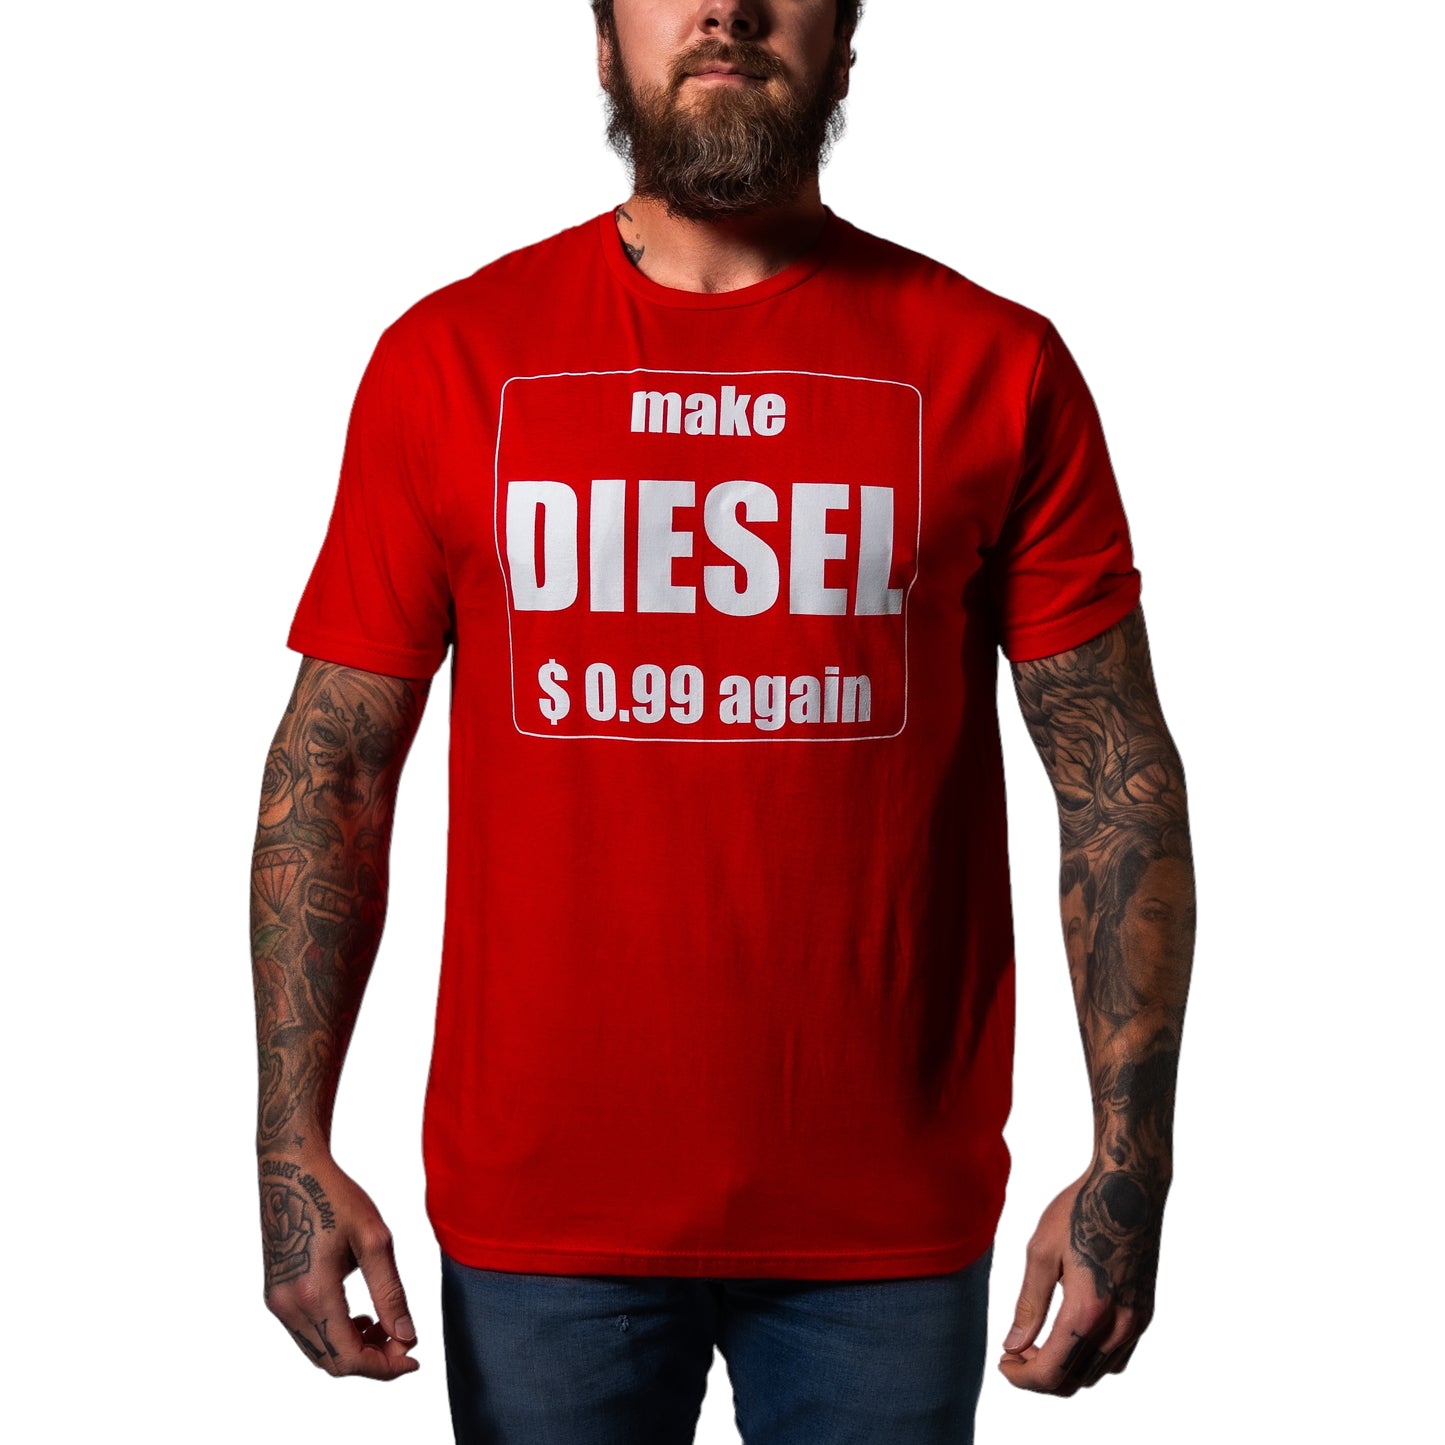 S&M Diesel "Make Diesel $0.99 Again" t-shirt- 2 color options avail